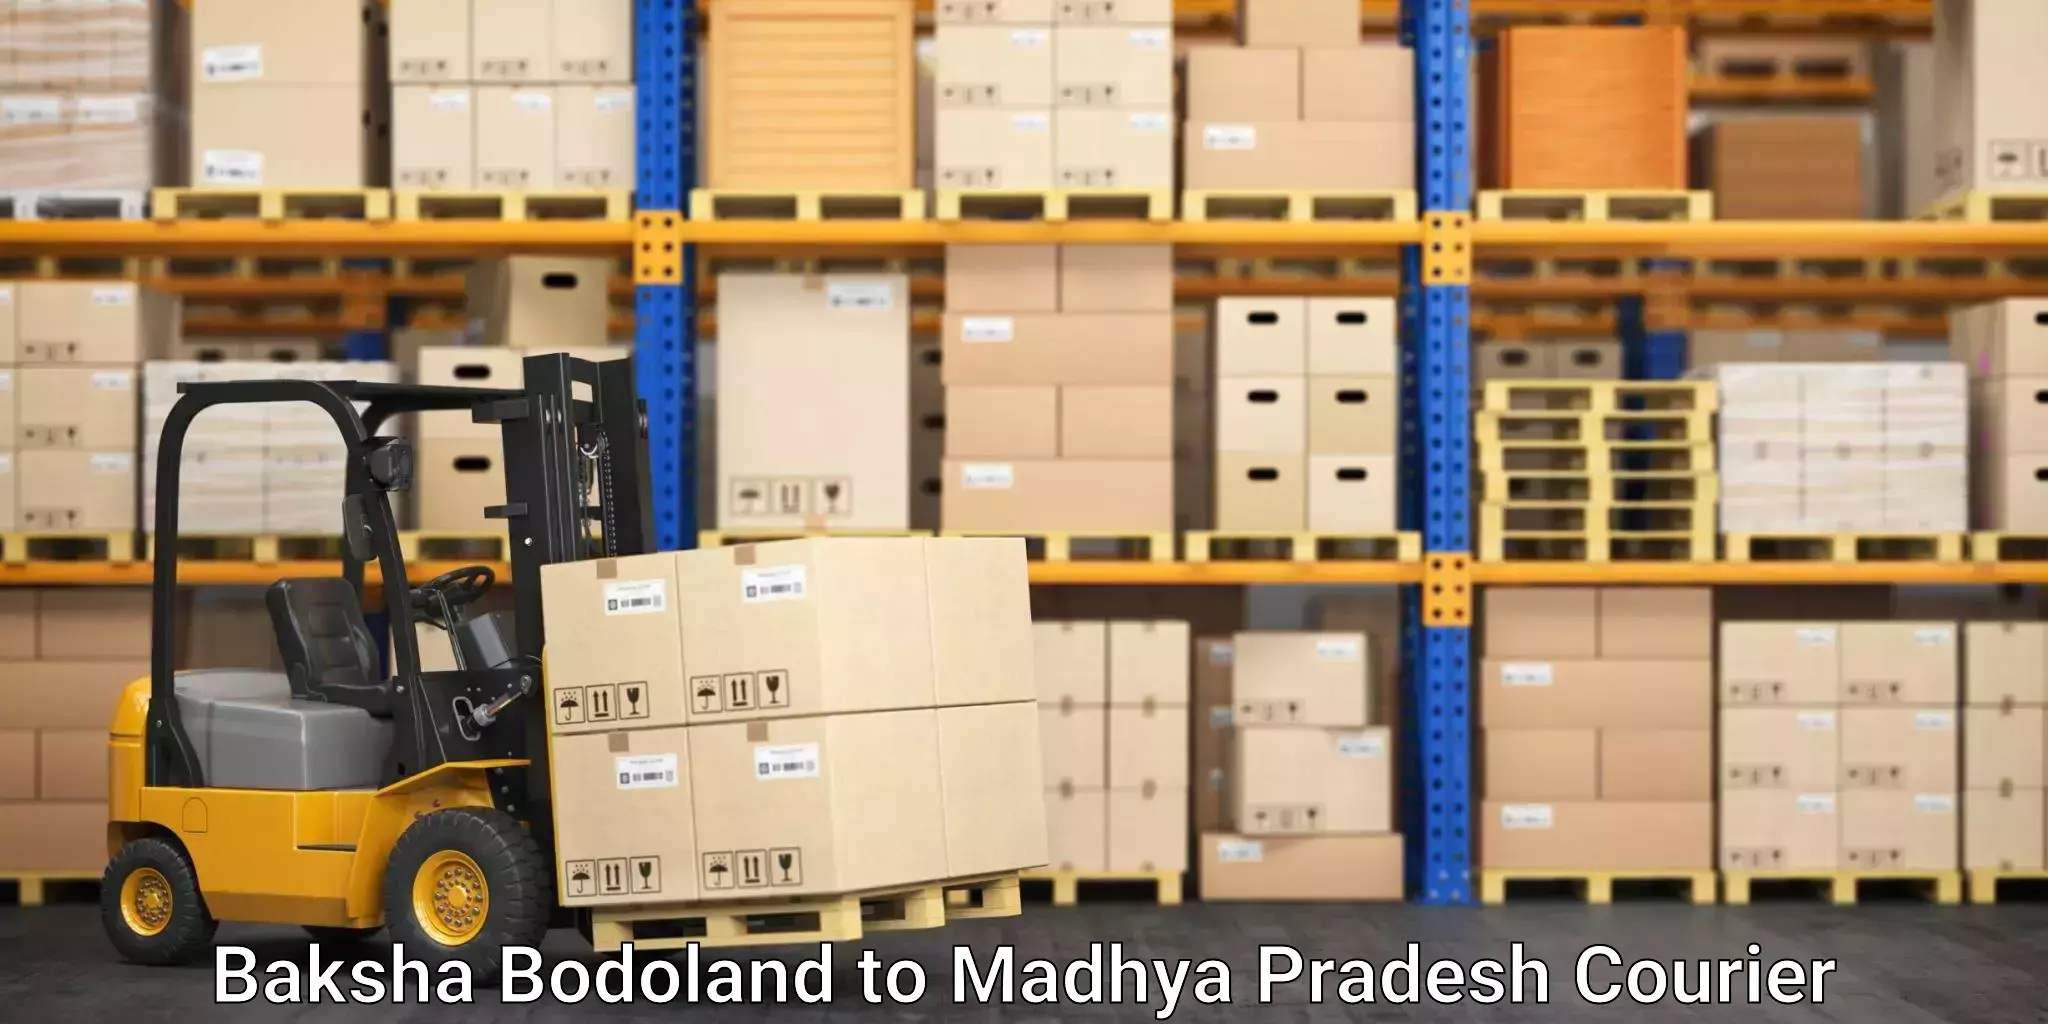 Streamlined delivery processes Baksha Bodoland to Bhopal